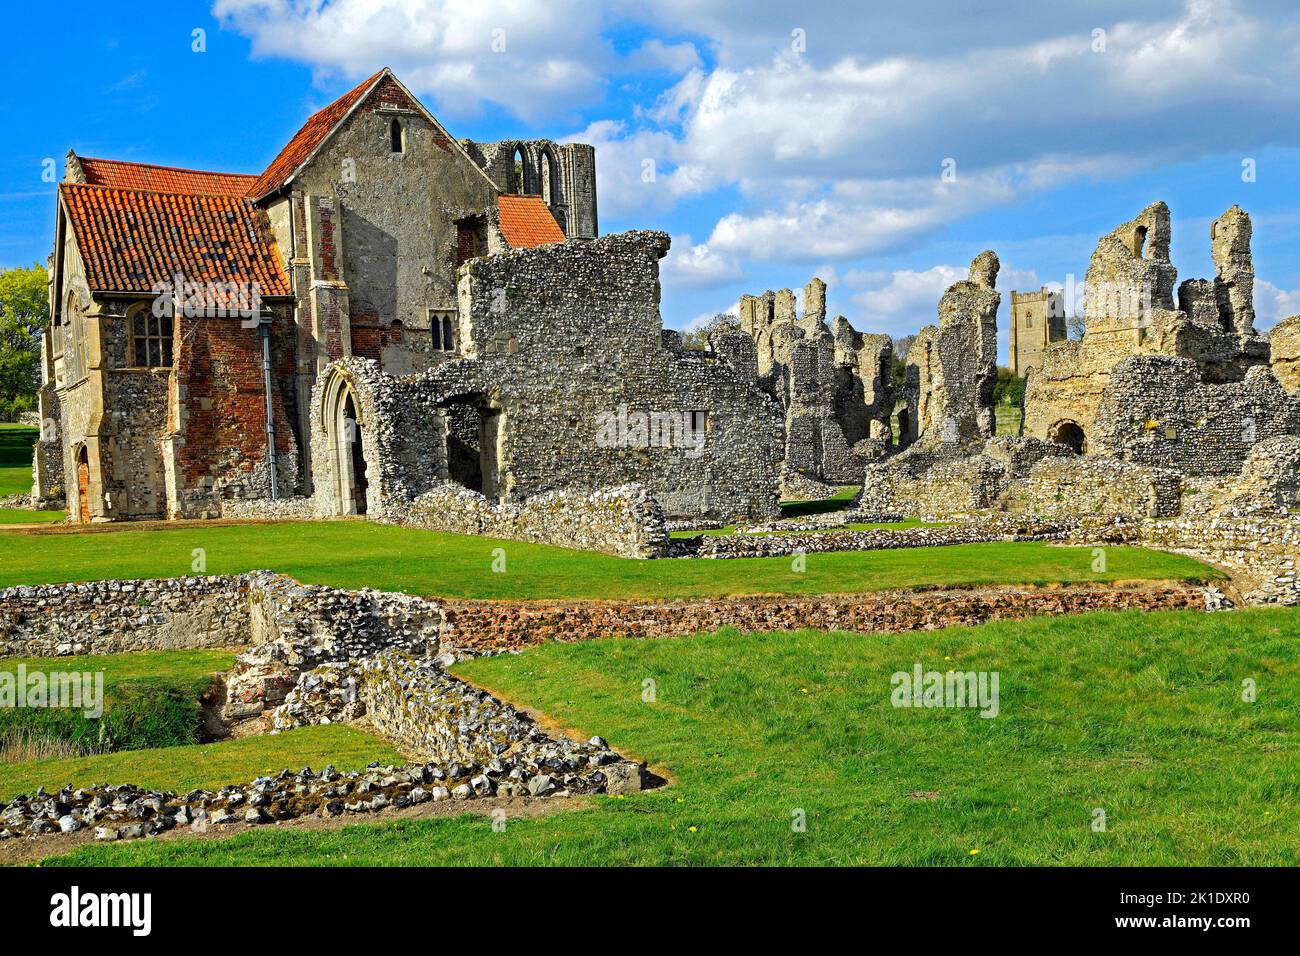 Castle Acre Priory, Norfolk, Monastic ruins, Cluniac monastic order,  England, UK Stock Photo